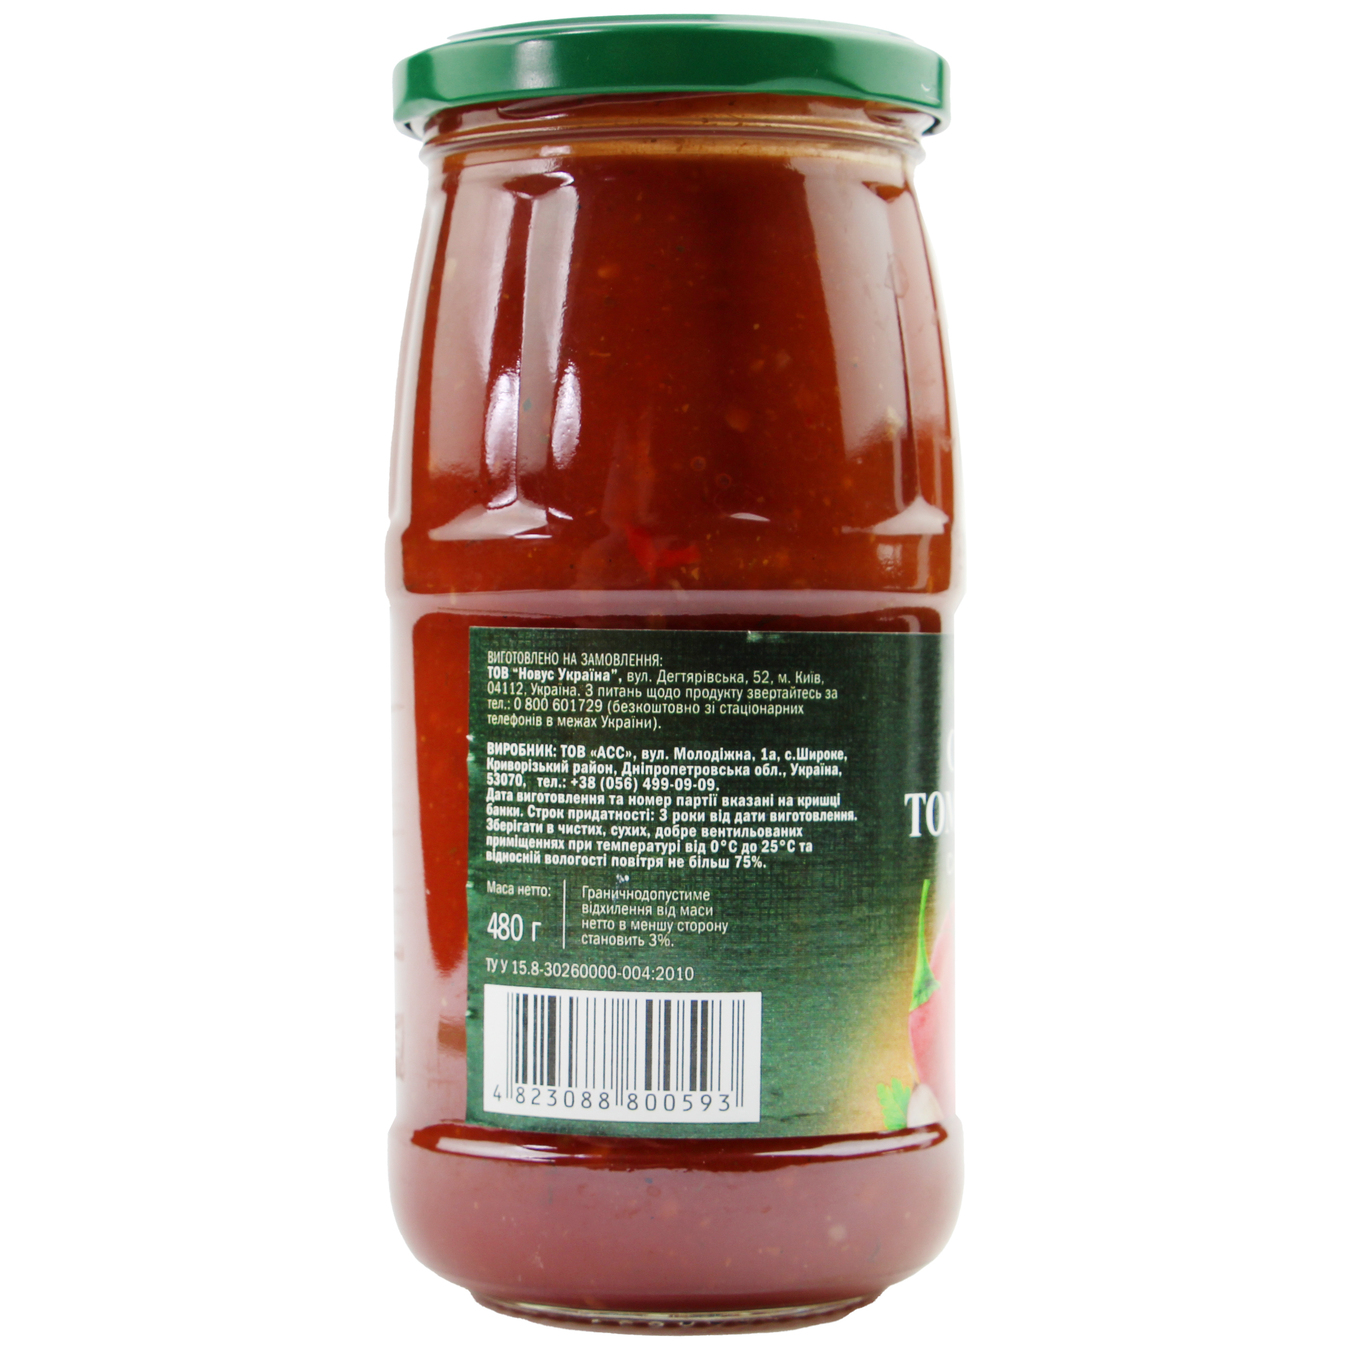 NOVUS Satsebeli Tomato Sauce 480g 3